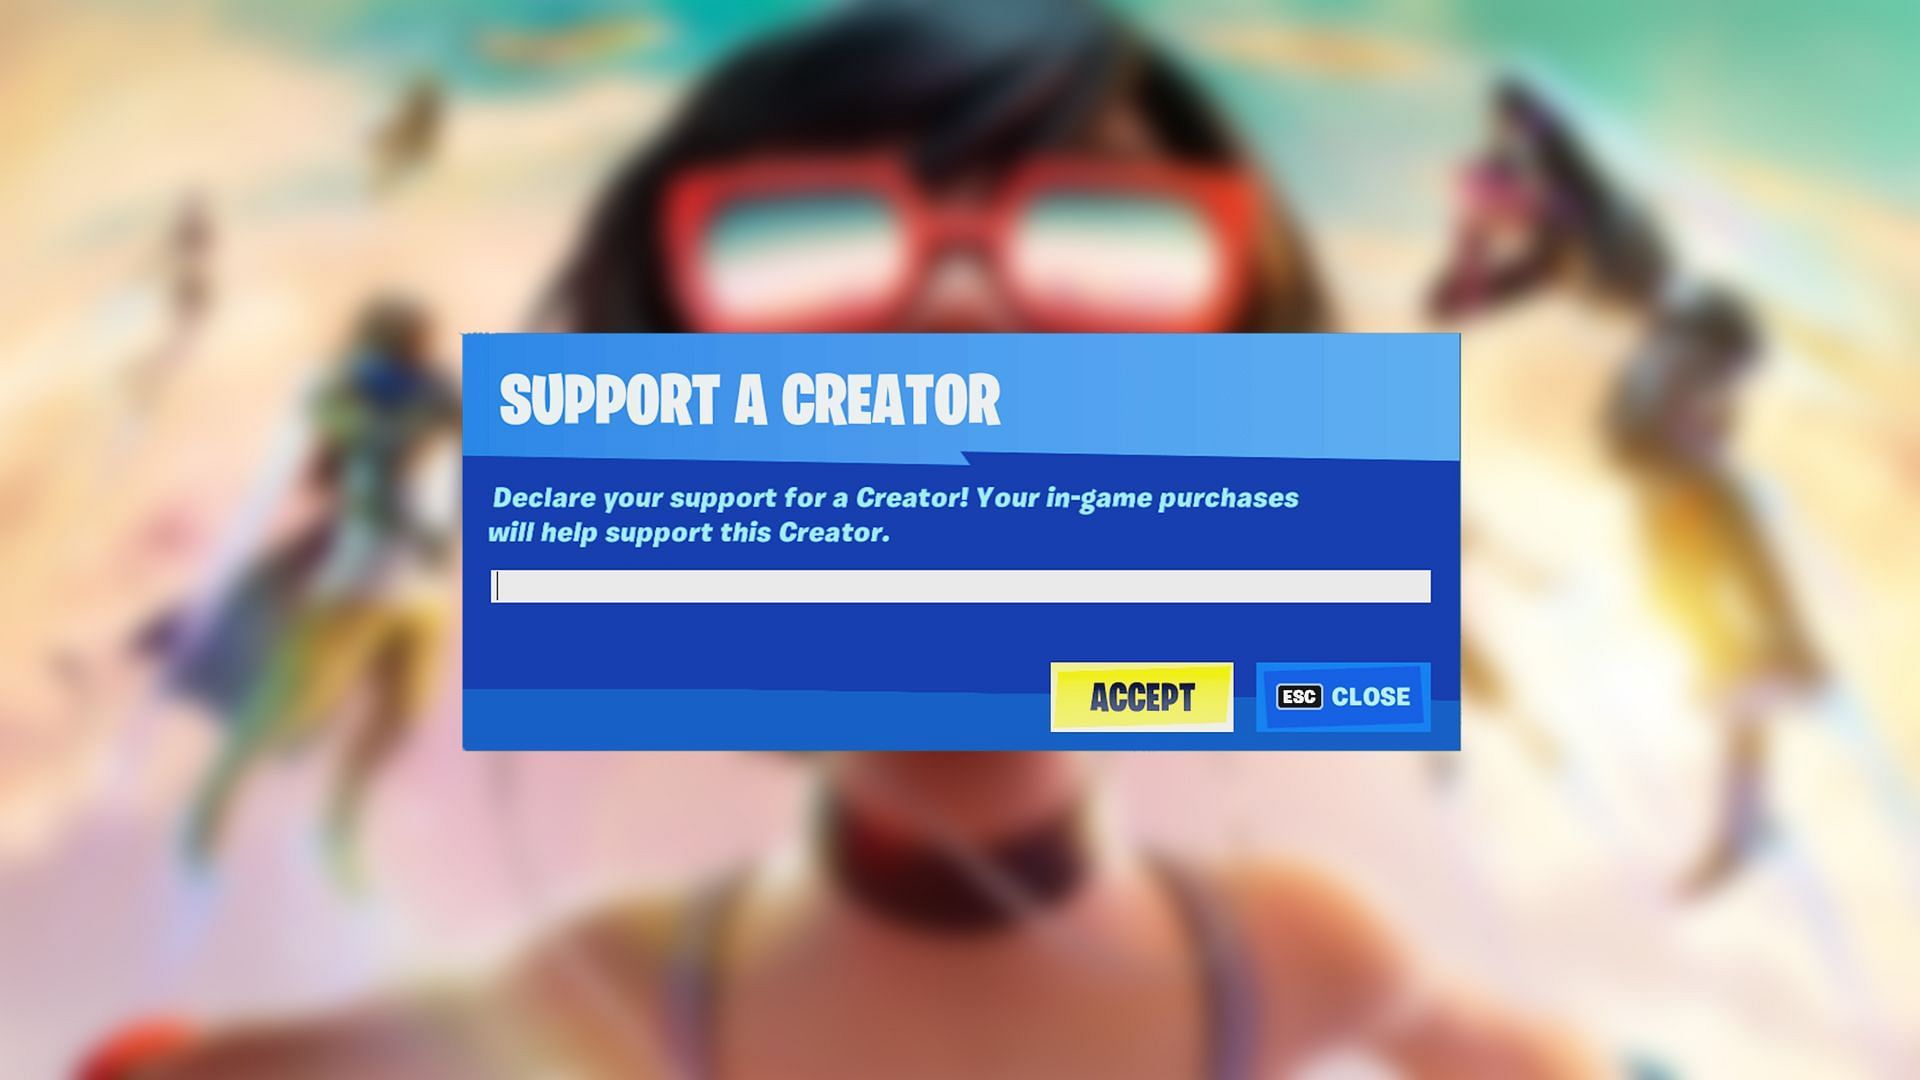 Support-a-Creator program is now open to everyone. (Image via Sportskeeda)